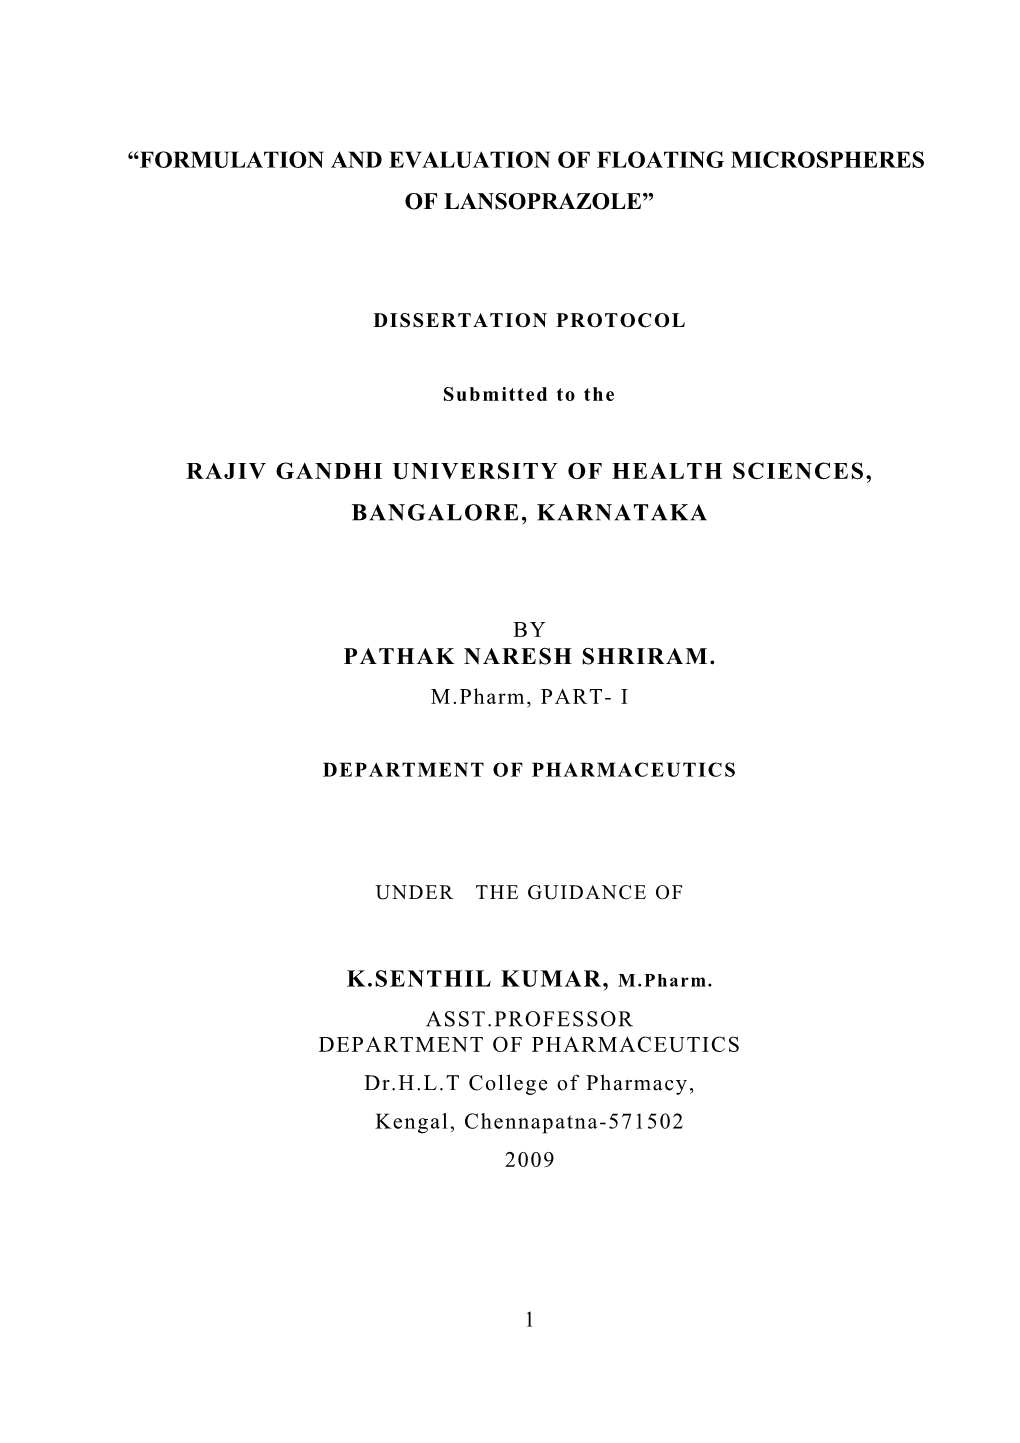 Rajiv Gandhi University of Health Sciences, Karnataka, Bangalore s18